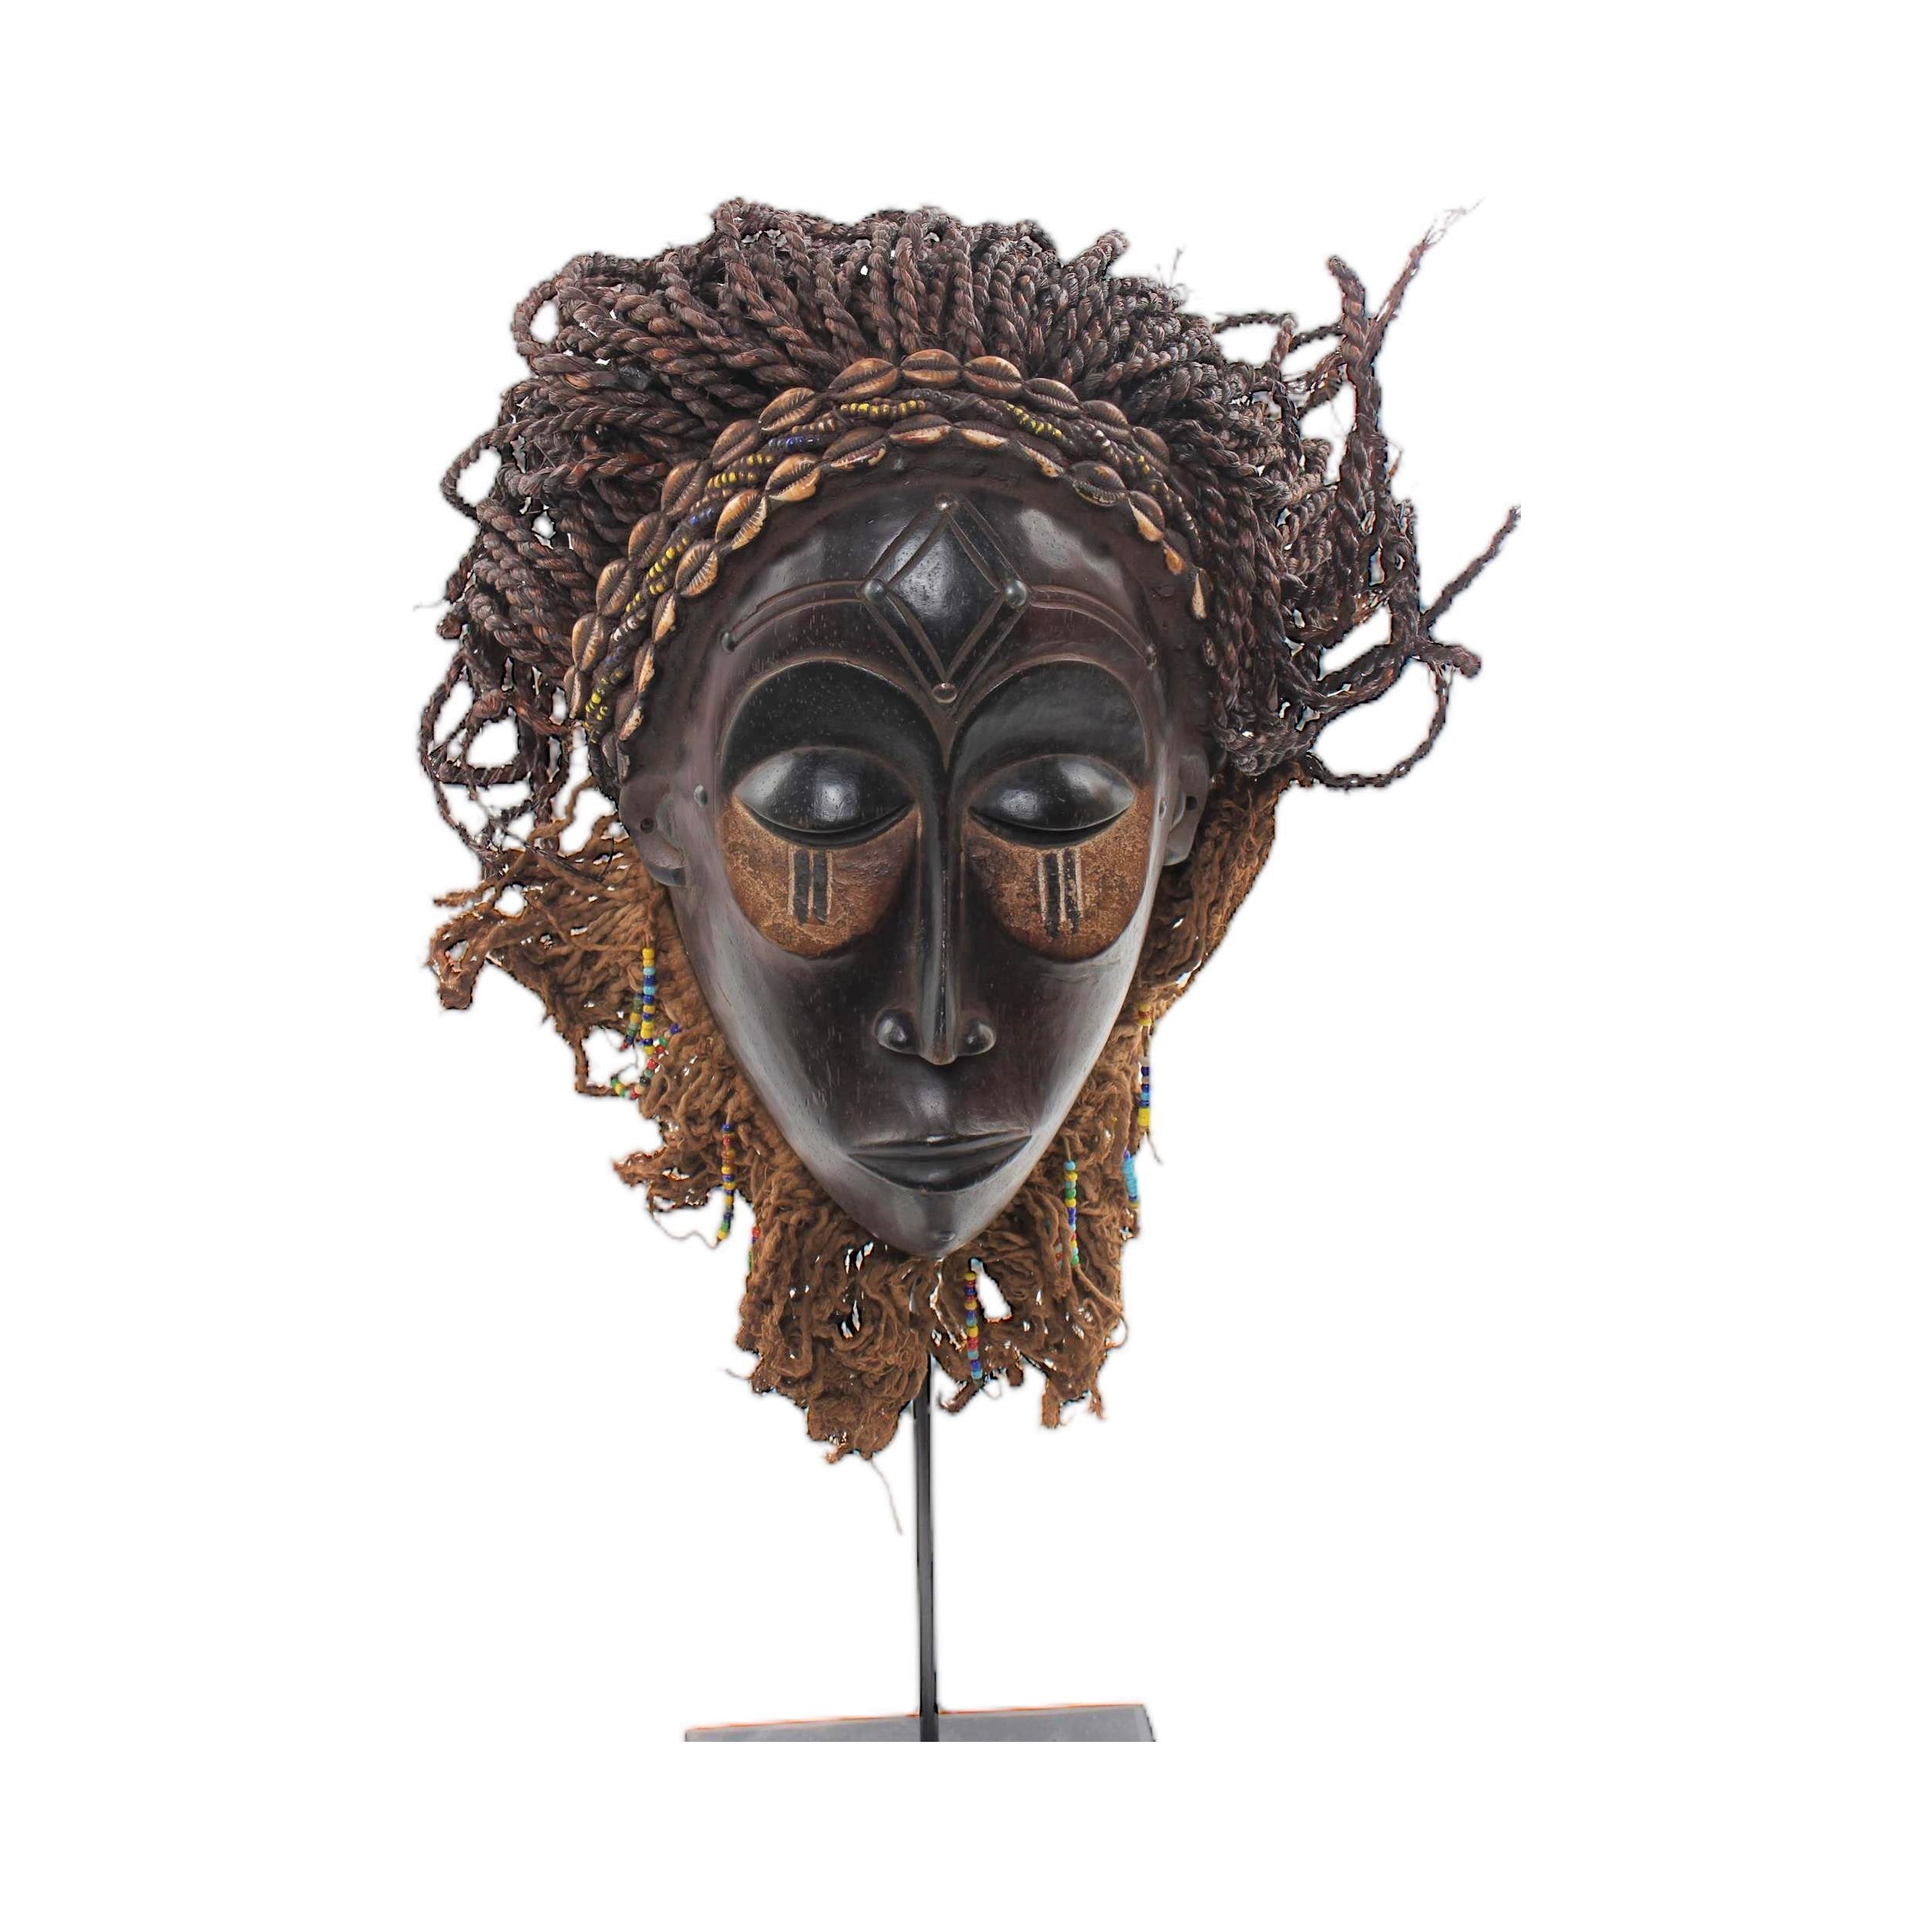 Chokwe Tribe Mask ~25.2" Tall - Mask